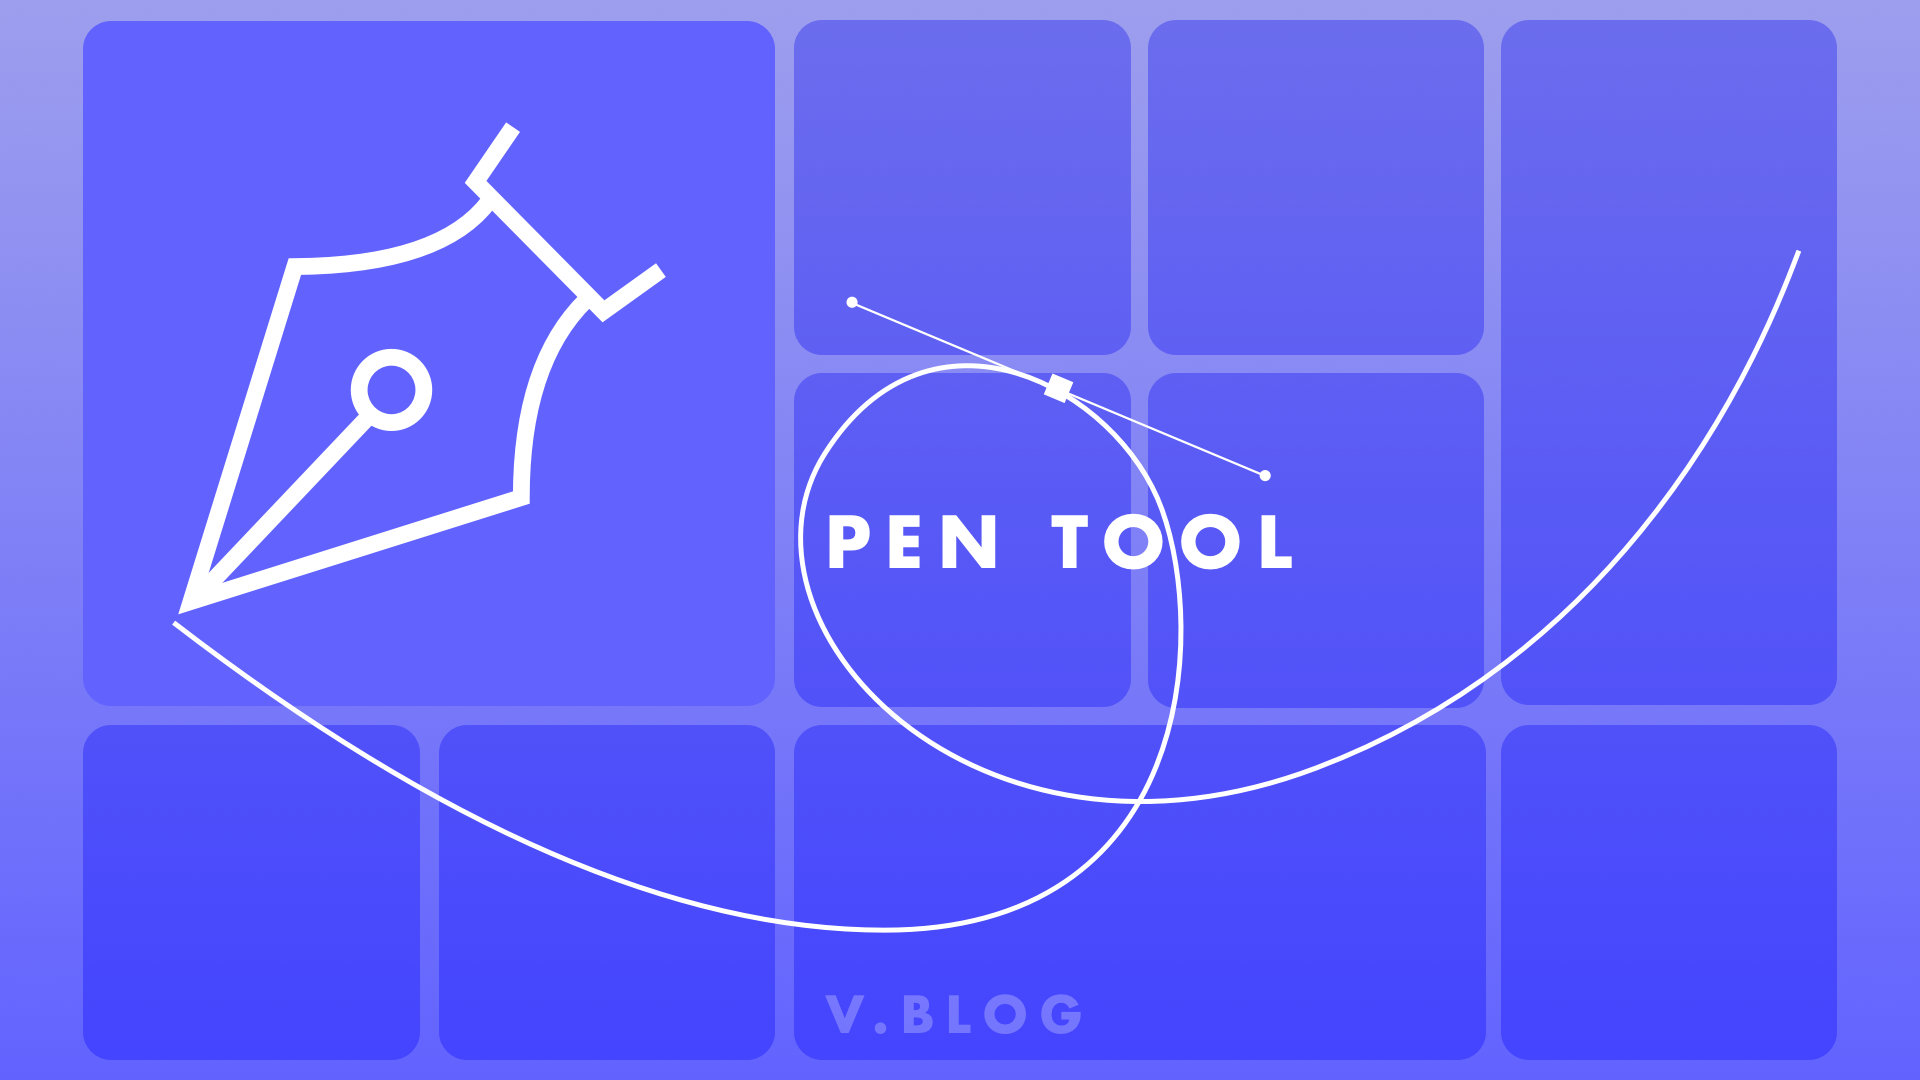 The Pen Tool